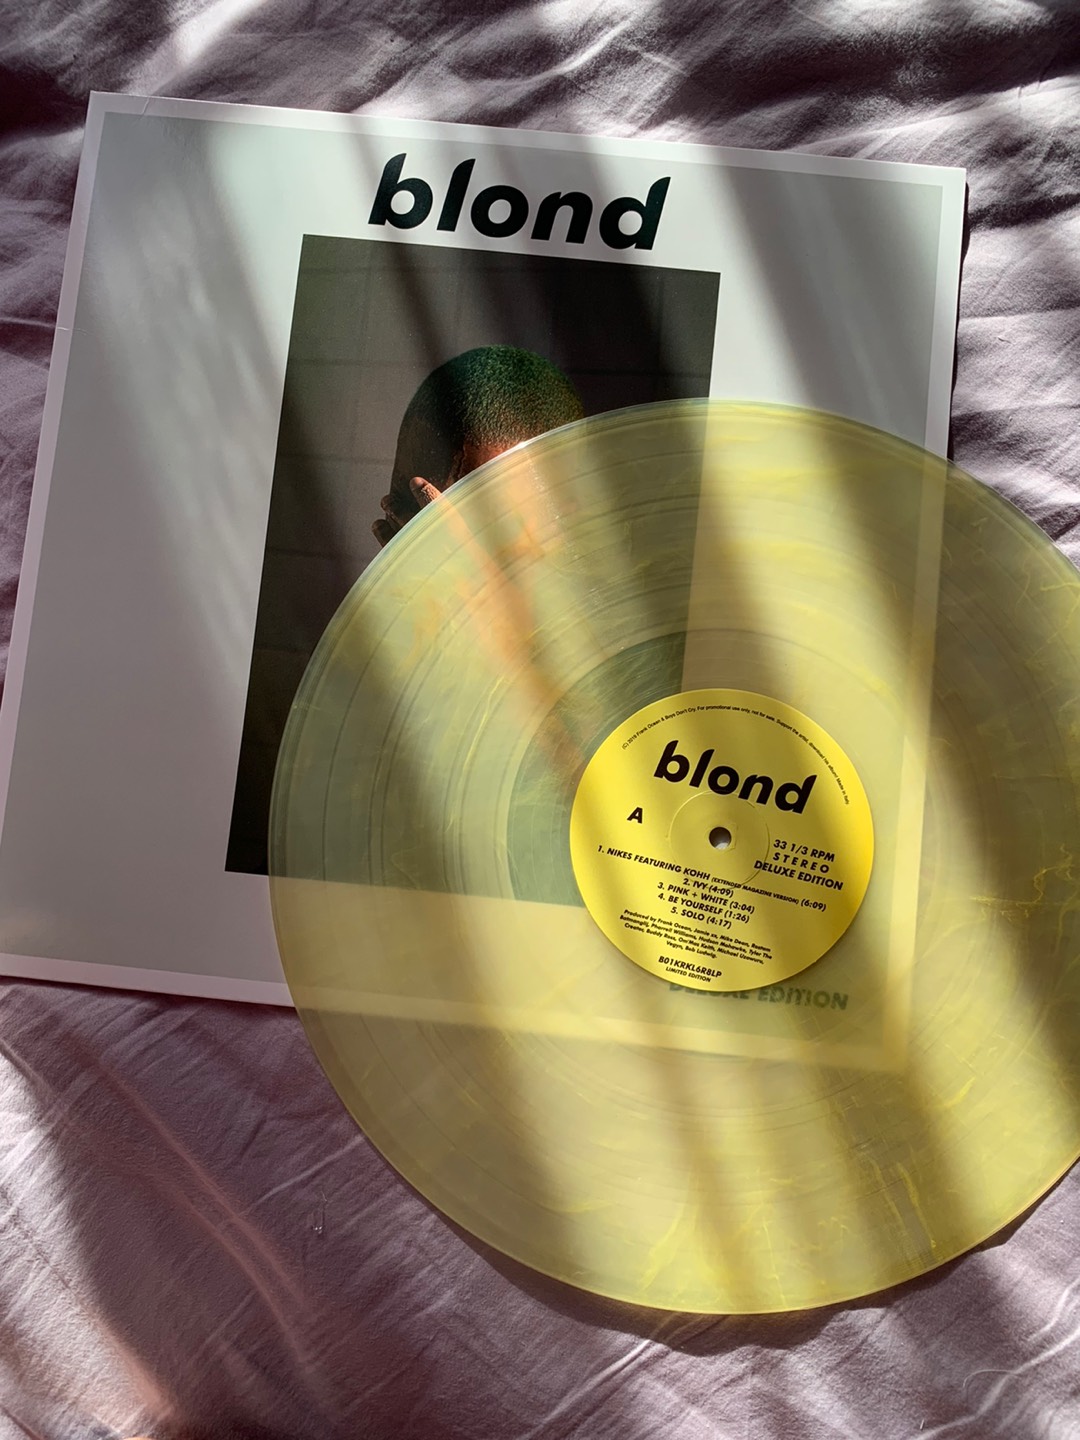 frank ocean blond blonde 2LP レコード - 洋楽